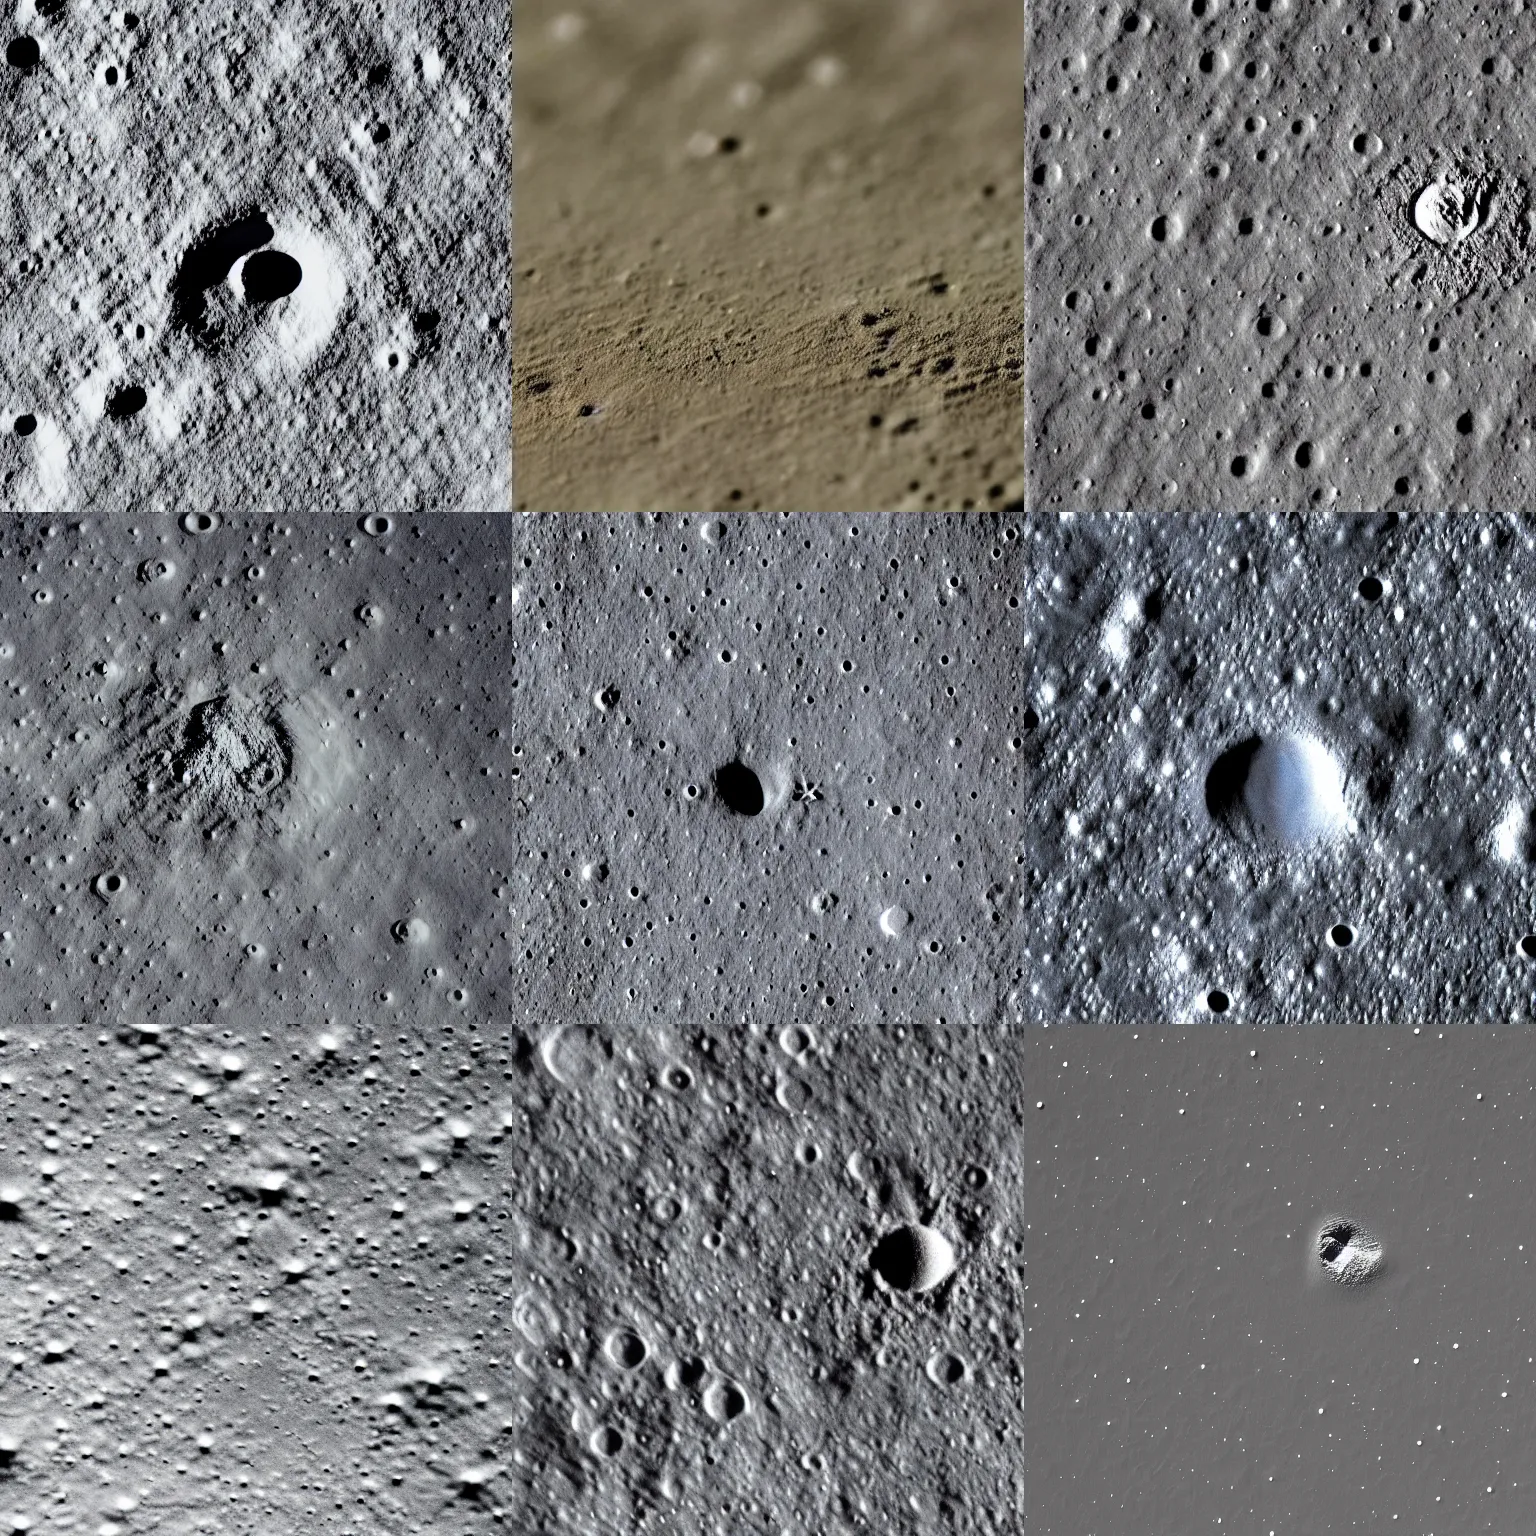 Prompt: nasa photograph of macro shot moonun surface